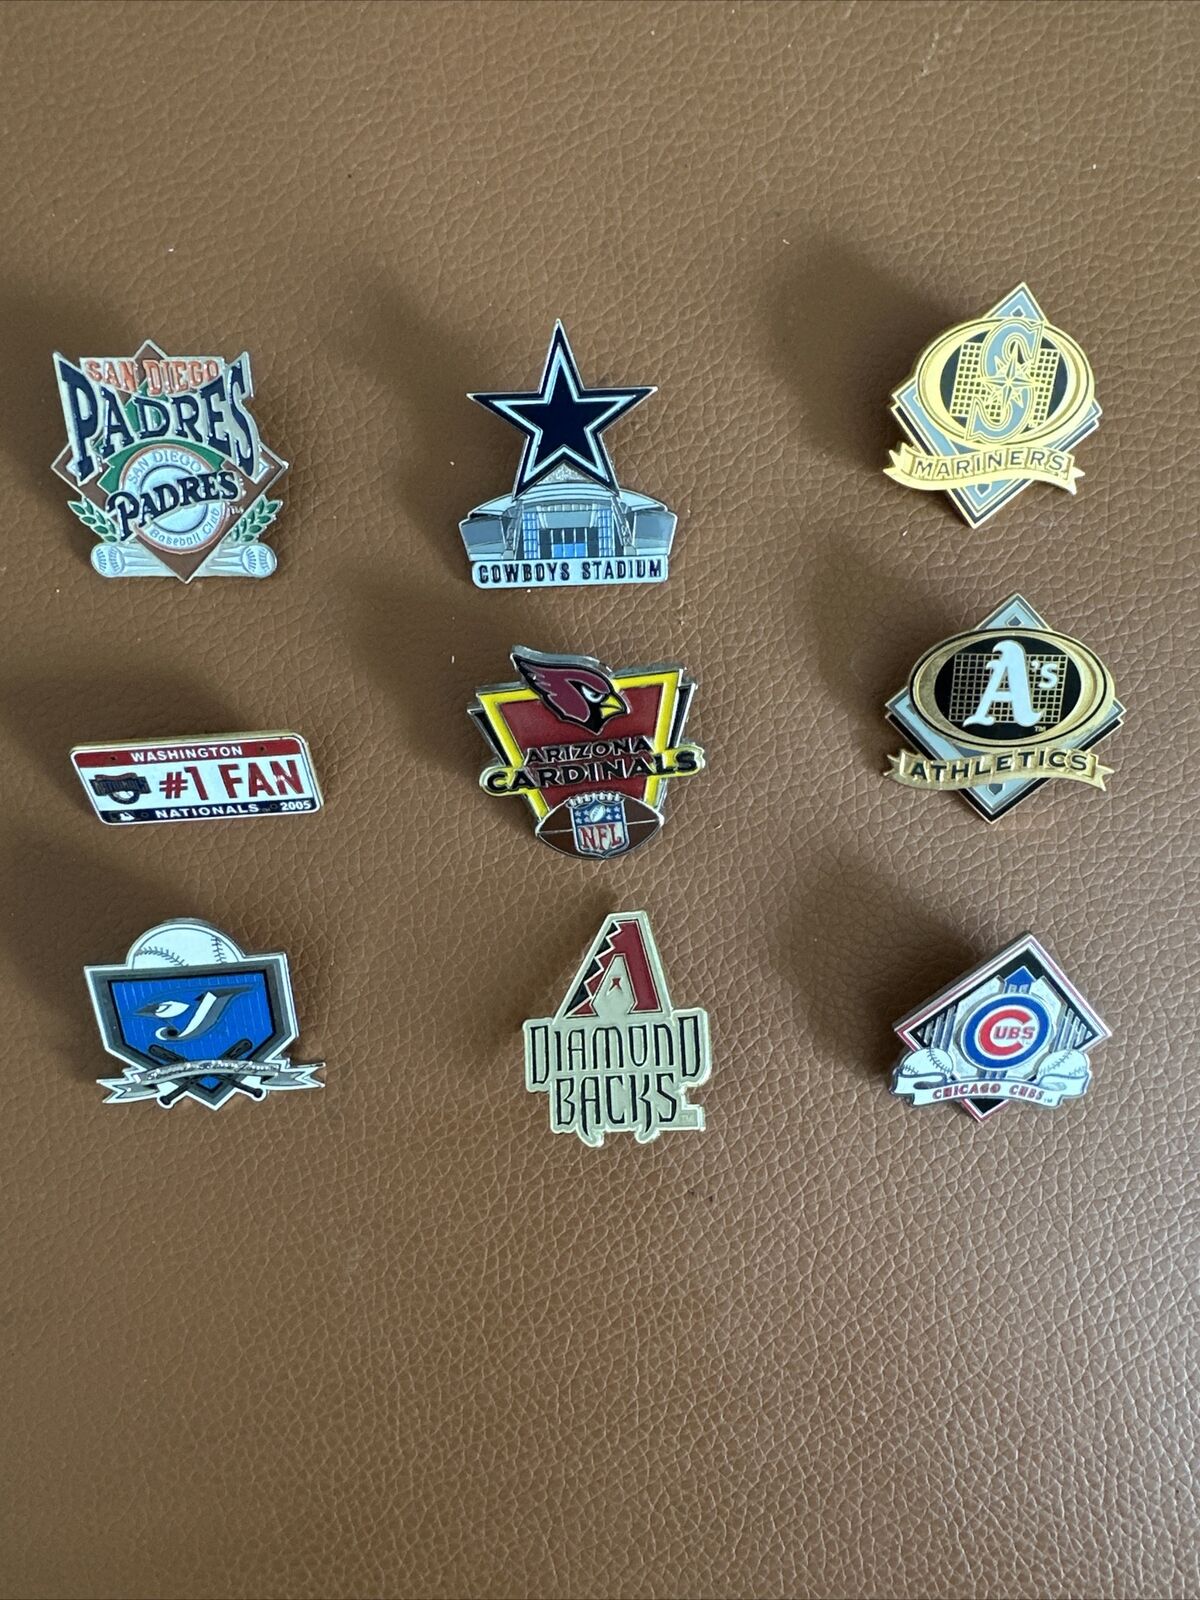 Vintage NFL and MLB pins